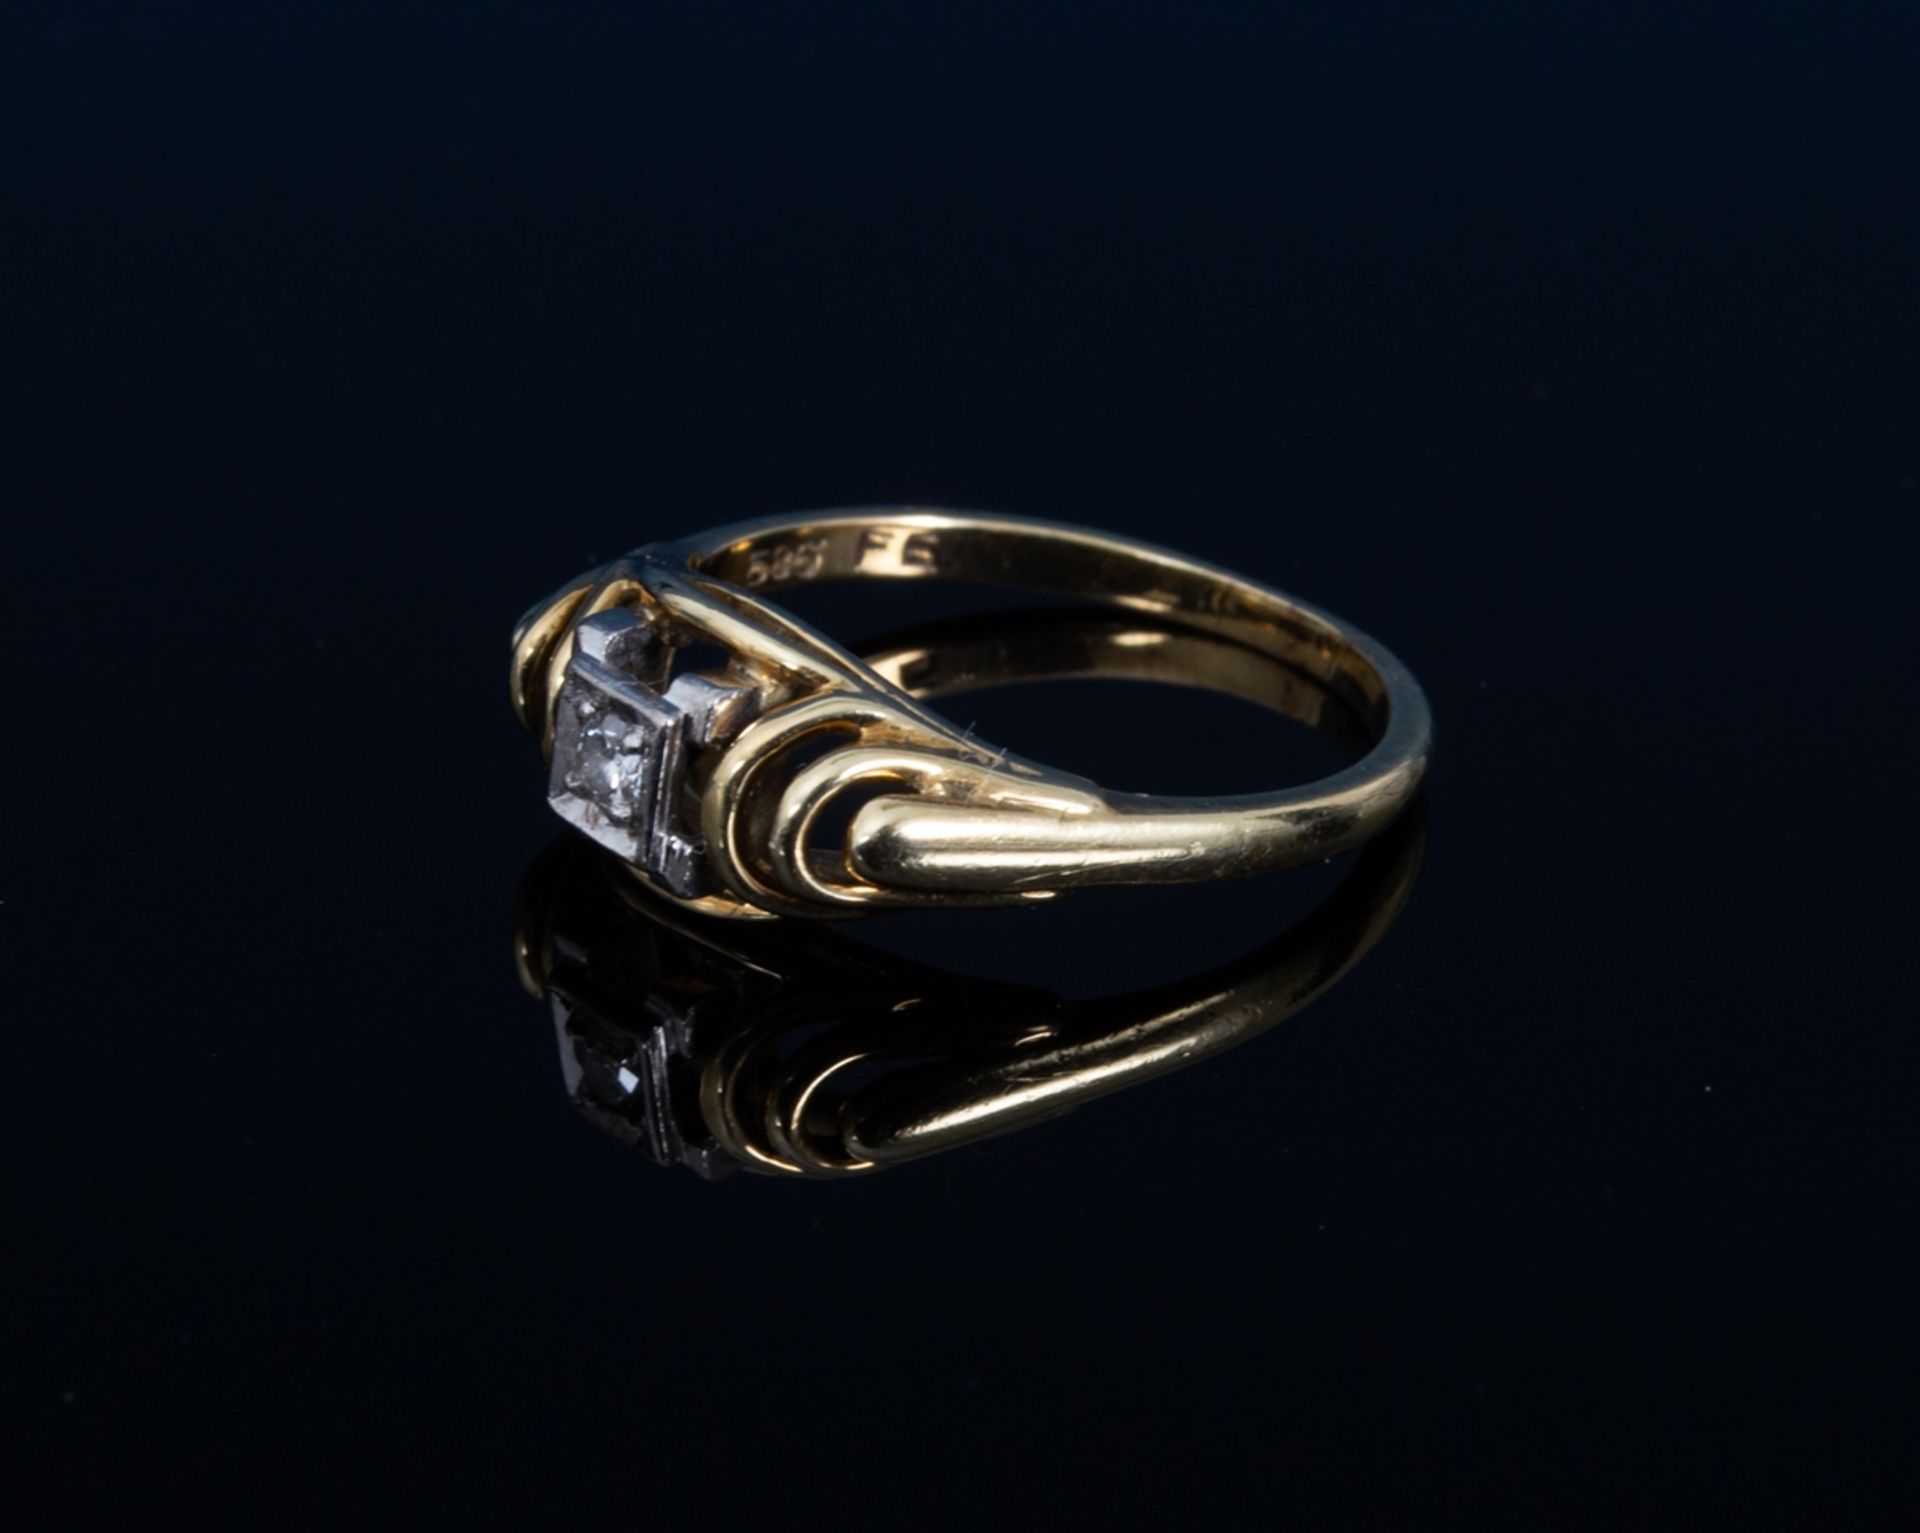 Goldener Ring mit Diamant besetzt, 585er Gelbgold, Diamant ca. 0,1 ct. Ringinnendurchmesser ca. 17